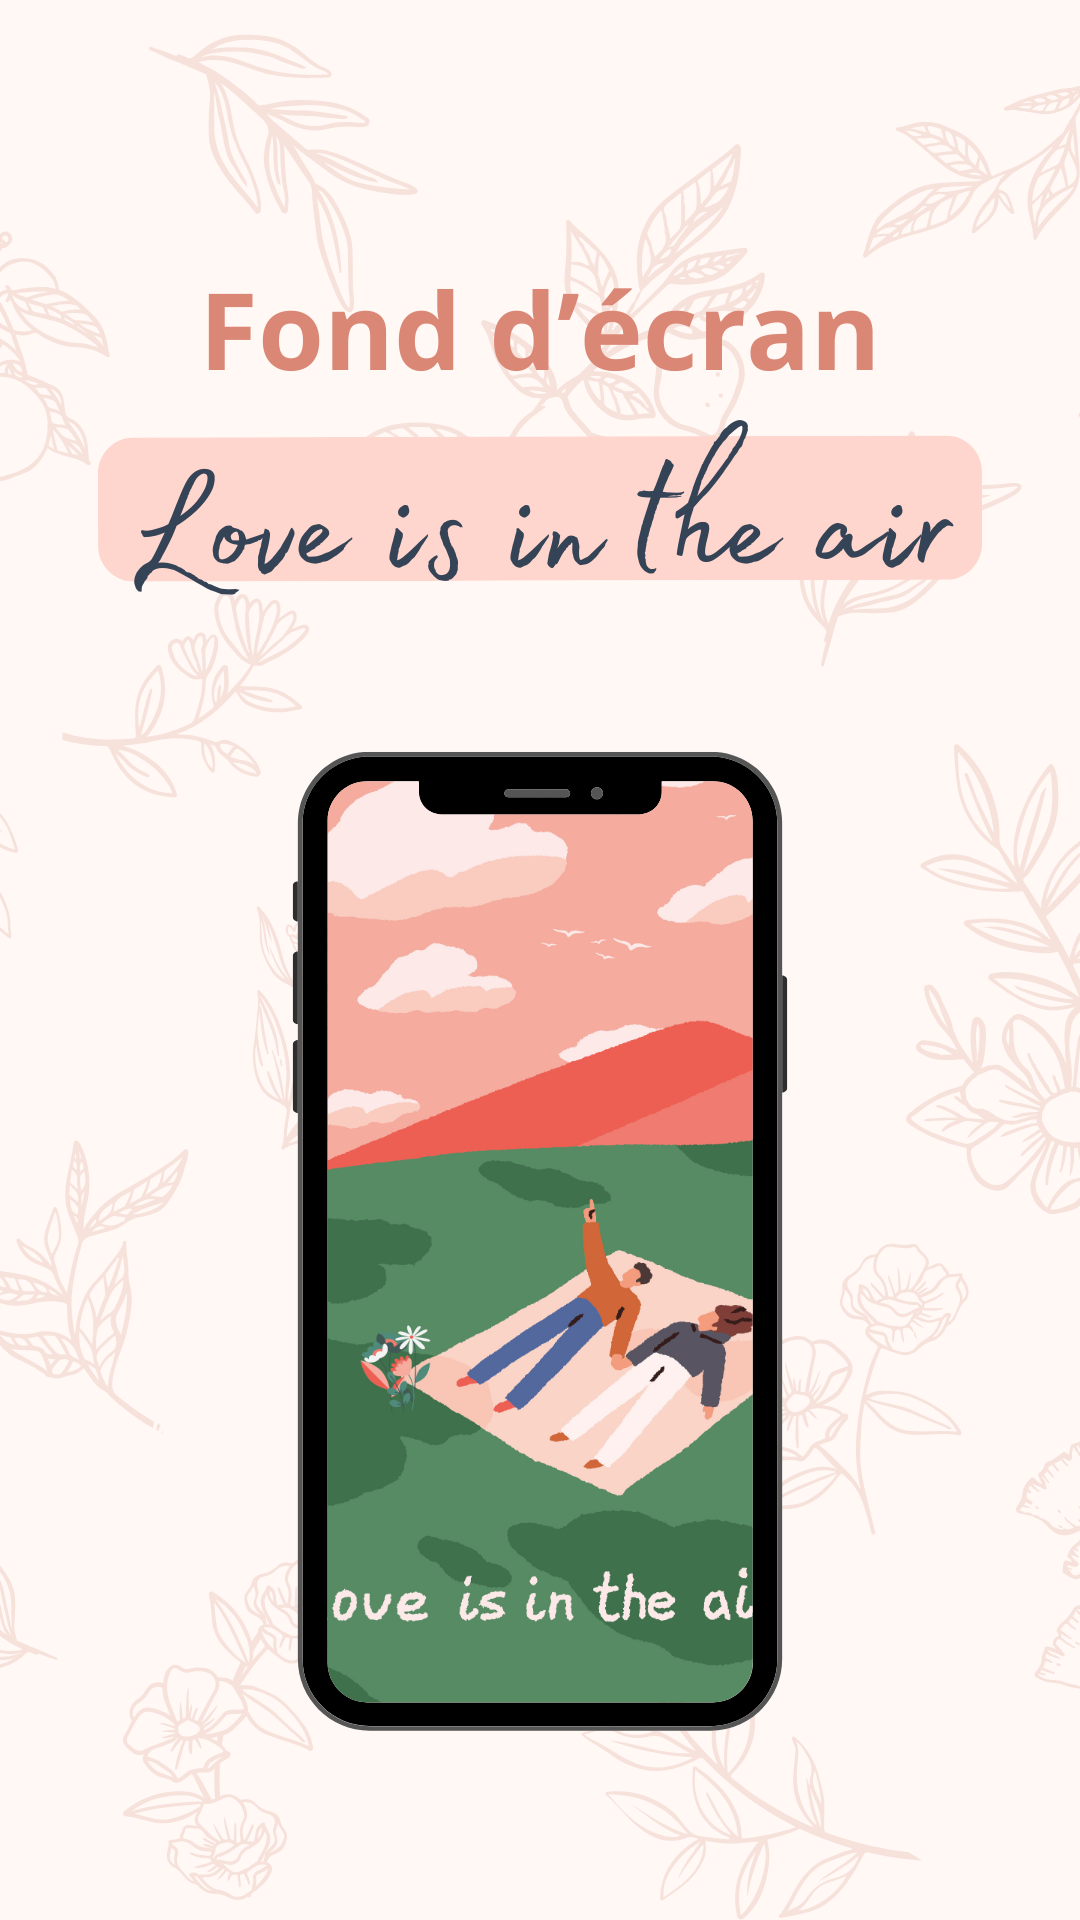 Fond d'écran pour Smartphone - Love is in the air